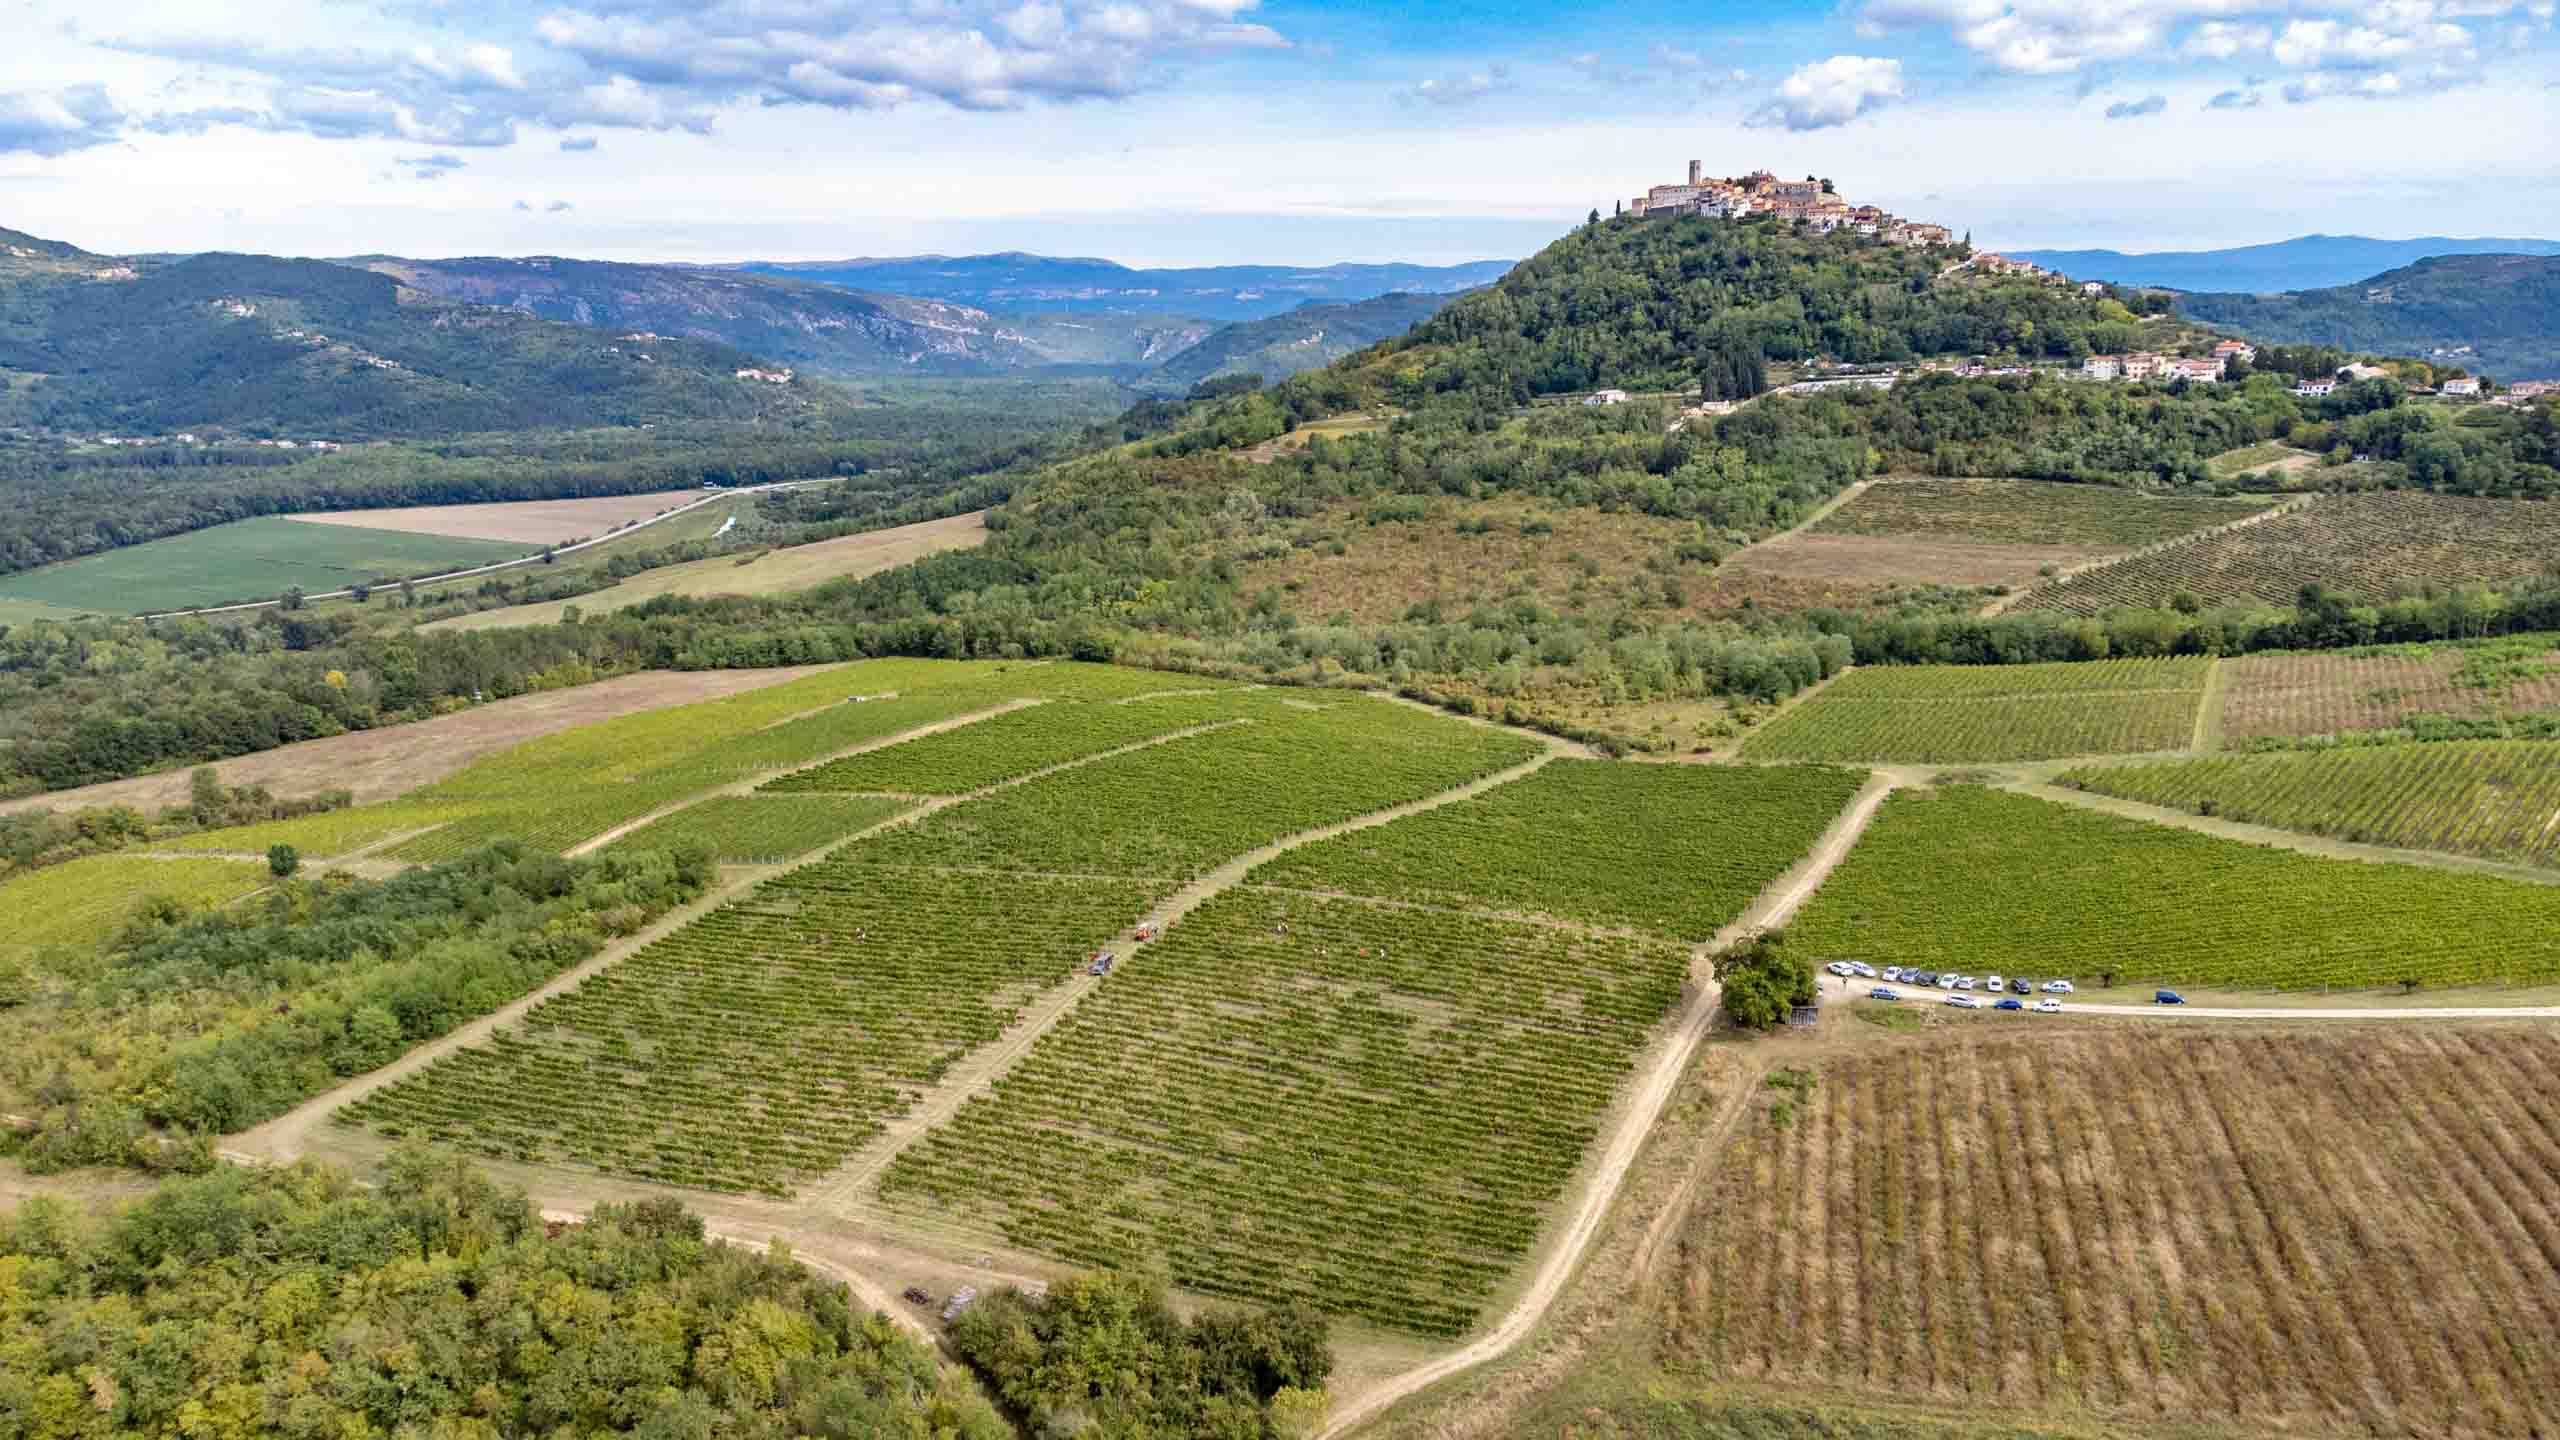 Cirò – Calabria’s flagship wine